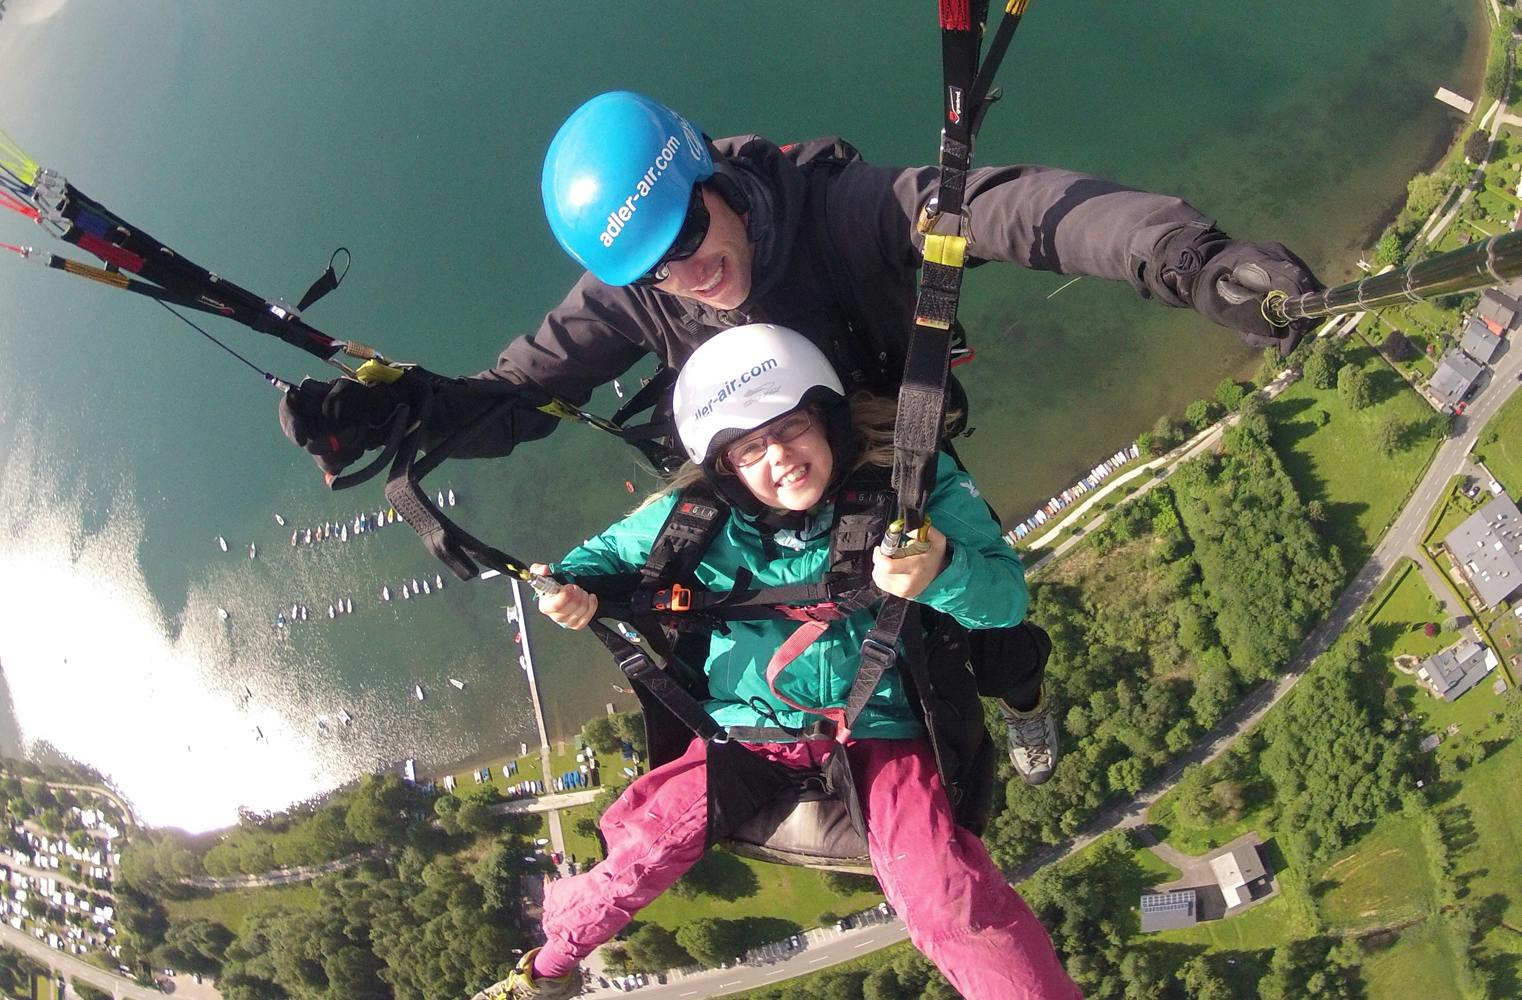 Tandemflug Paragliding | Grandioses Alpenpanorama Zeller See